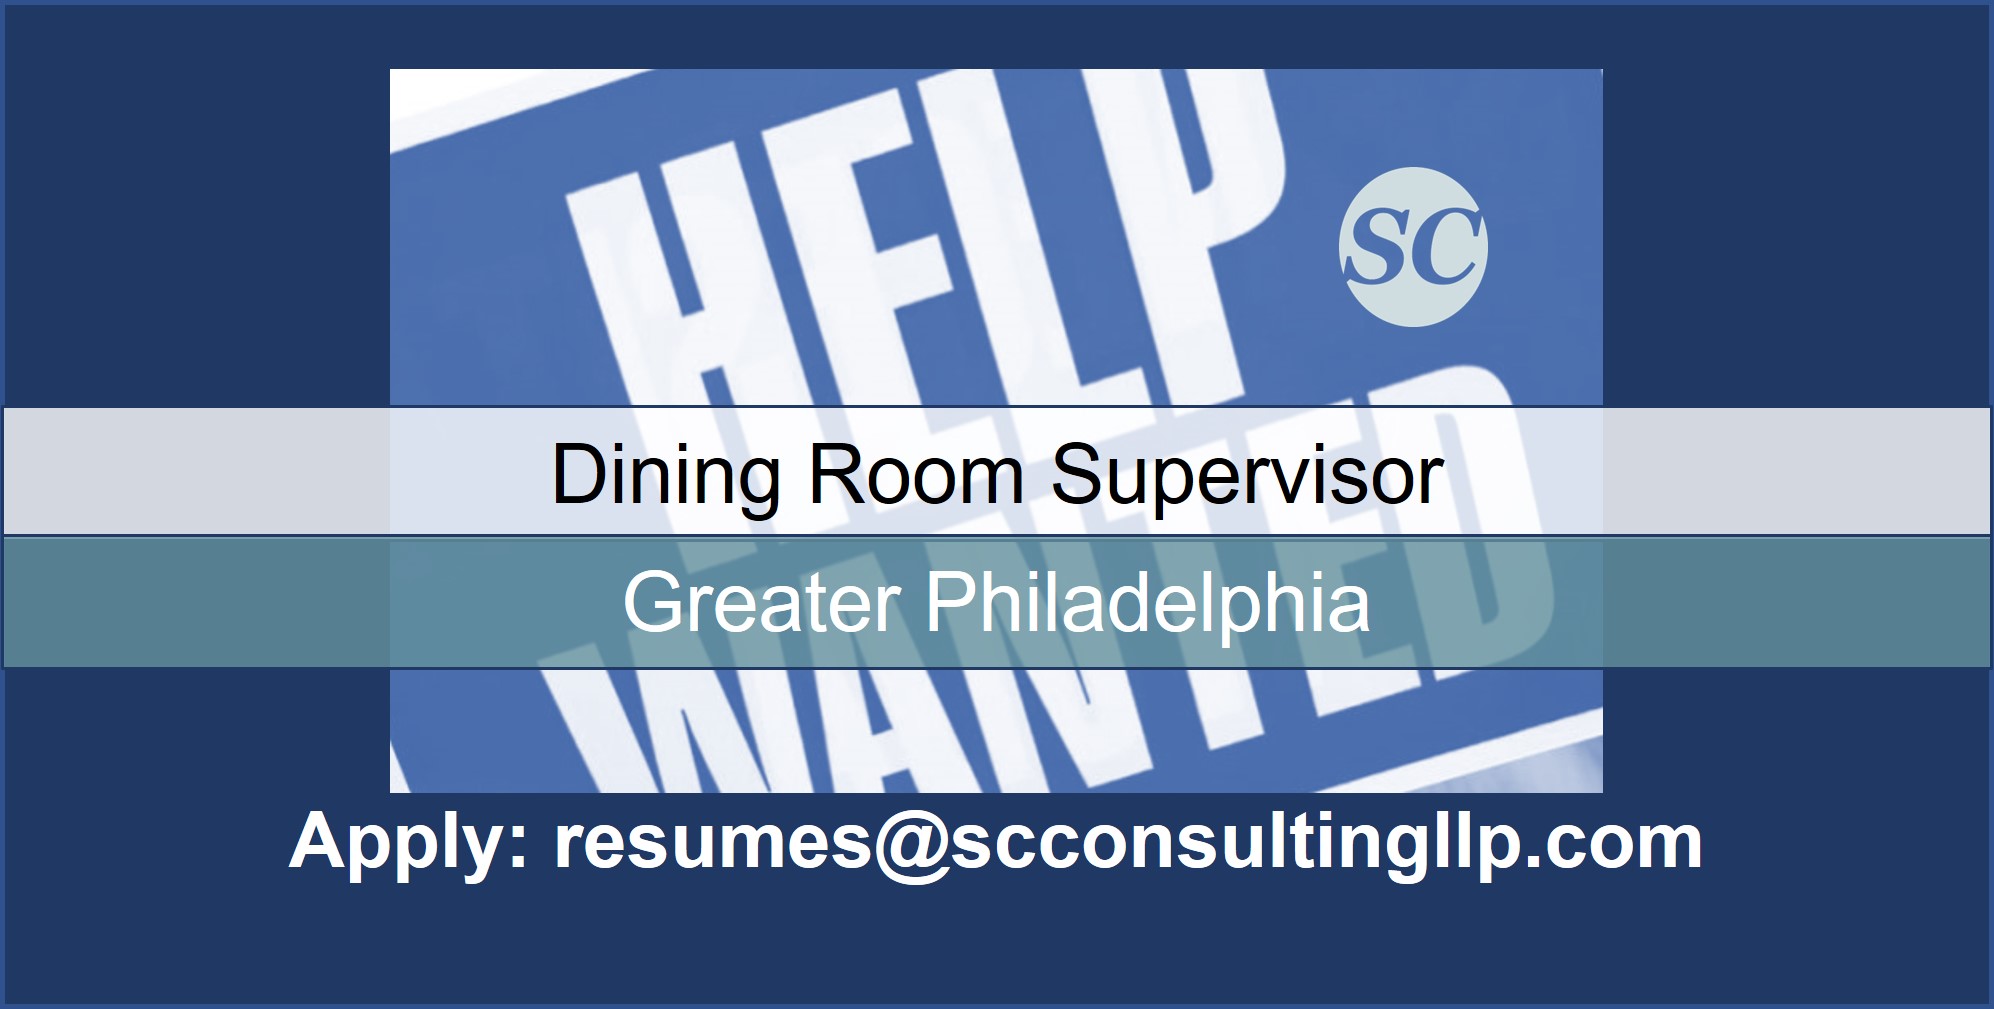 Dining Room Supervisor Retirement Home Job Description